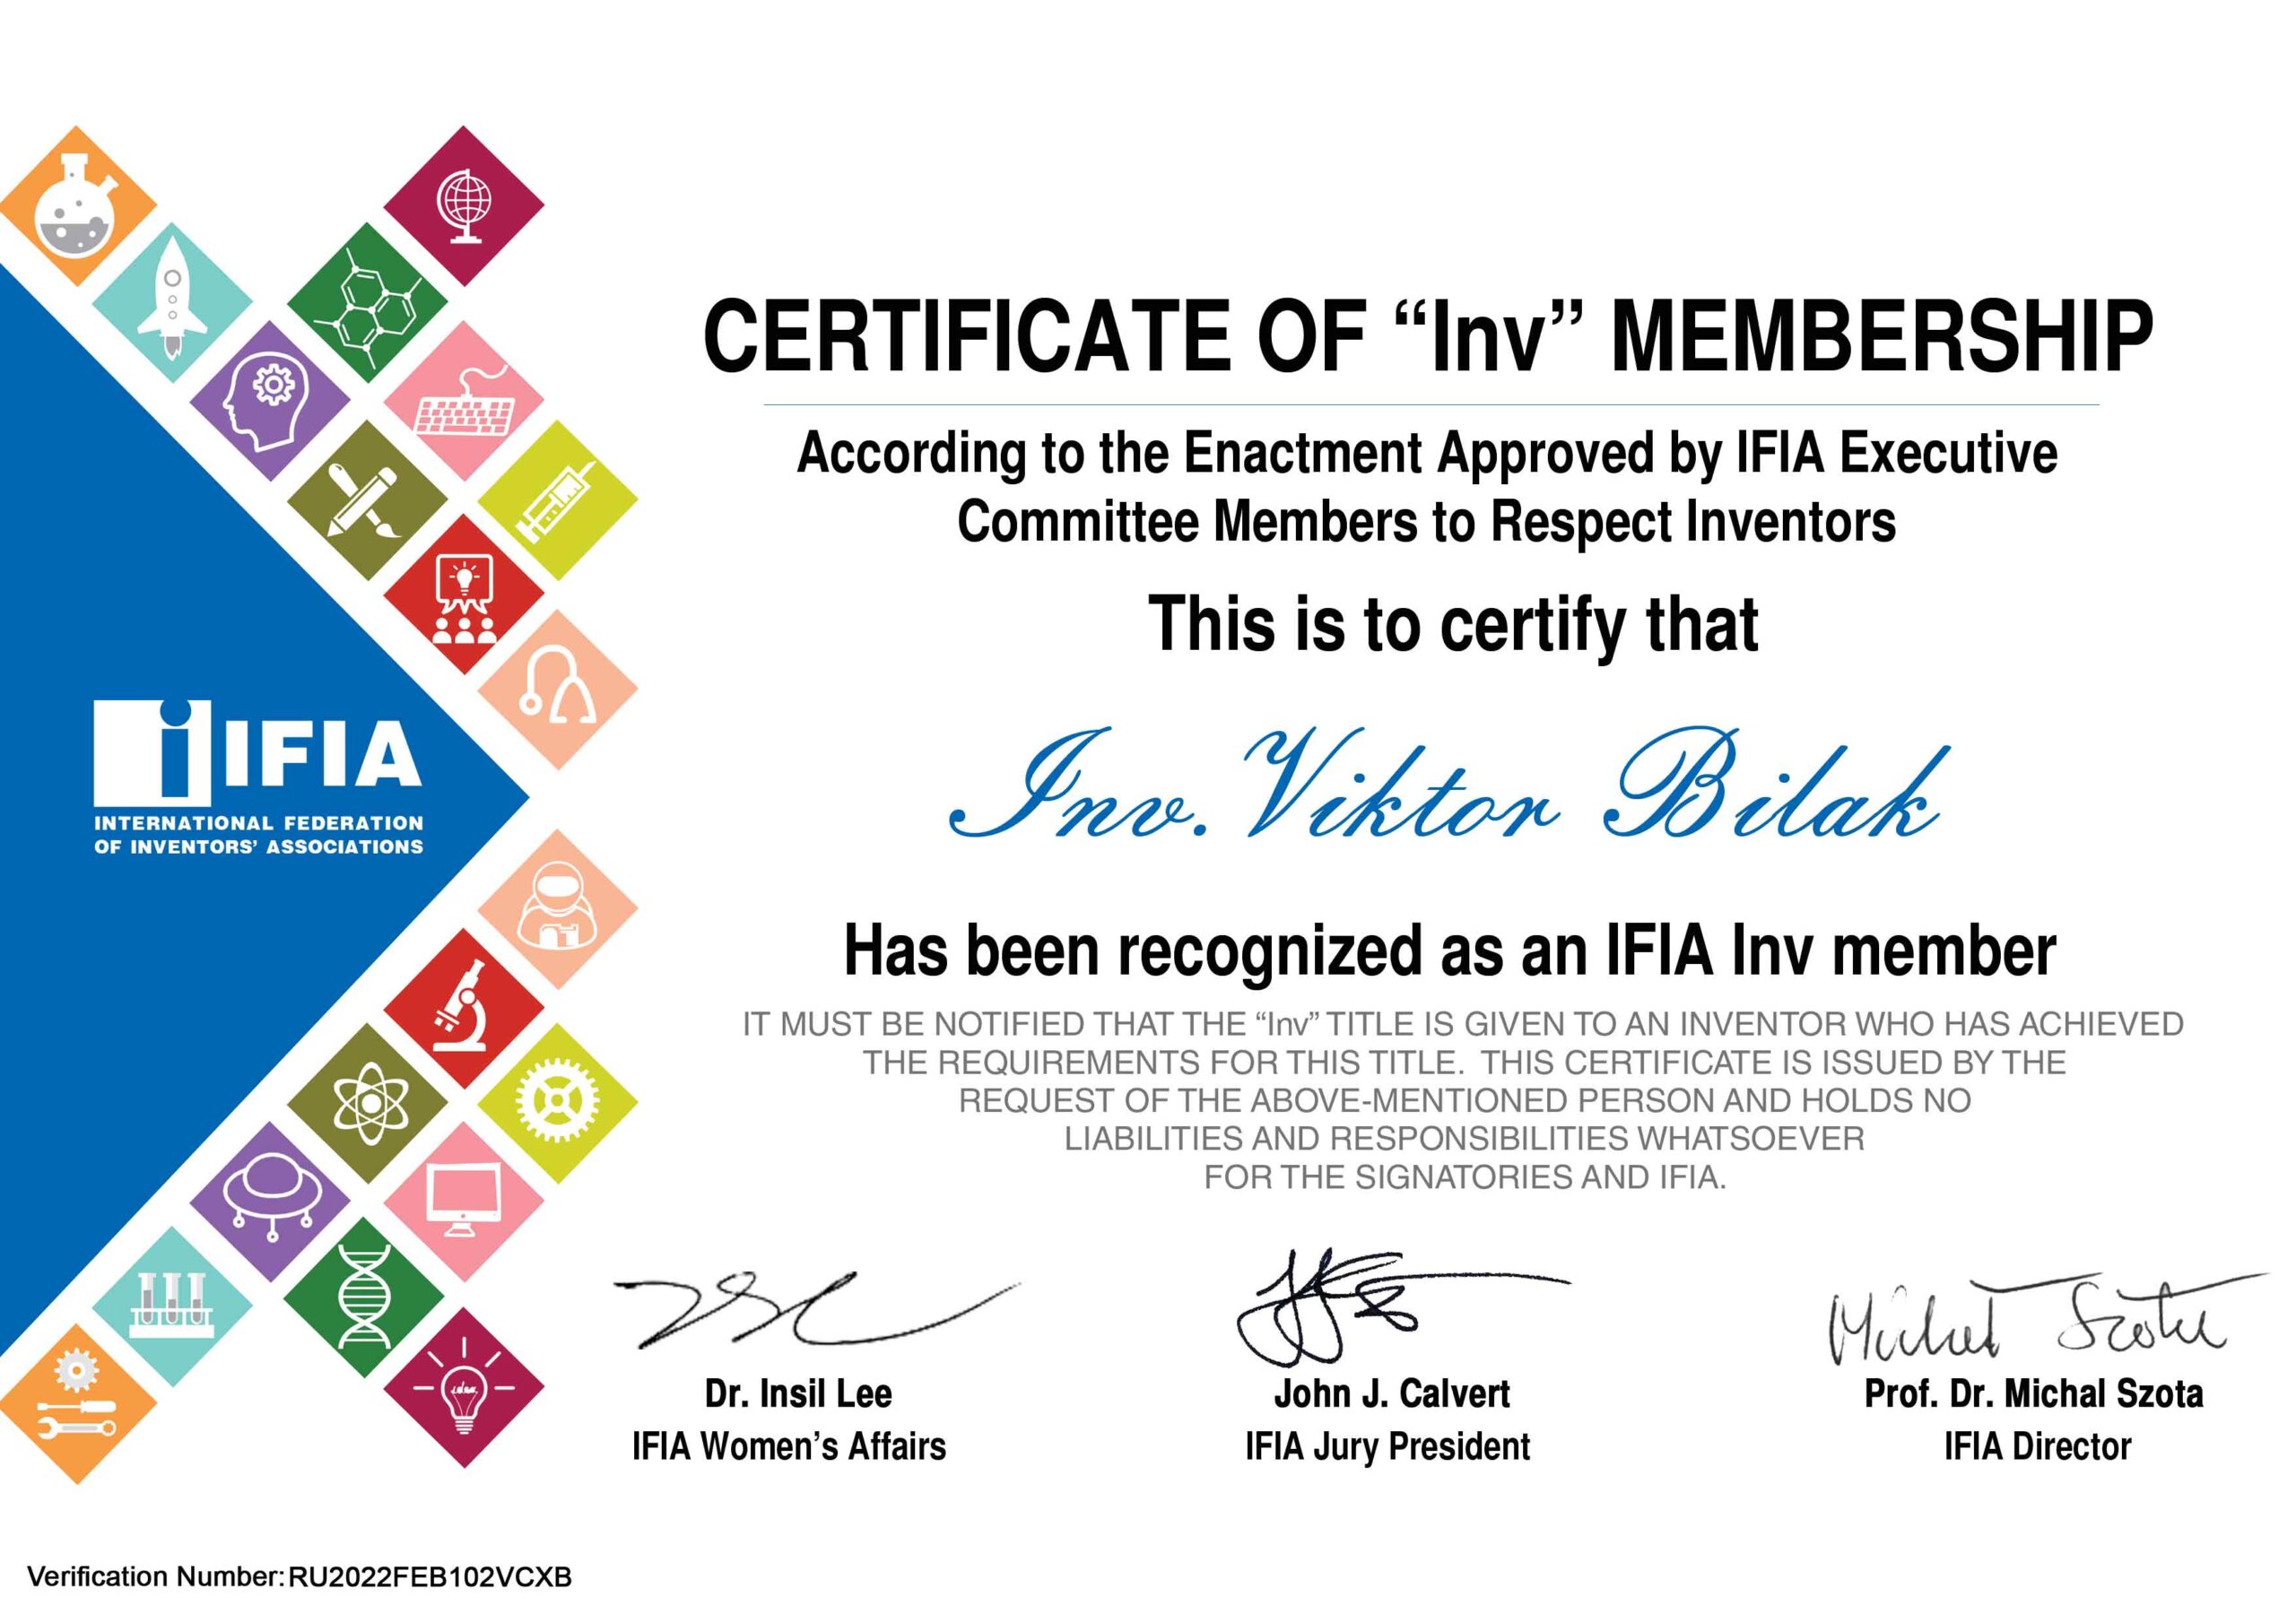 IFIA Inv member, International Federation of Inventors' Associations, Geneva, Switzerland